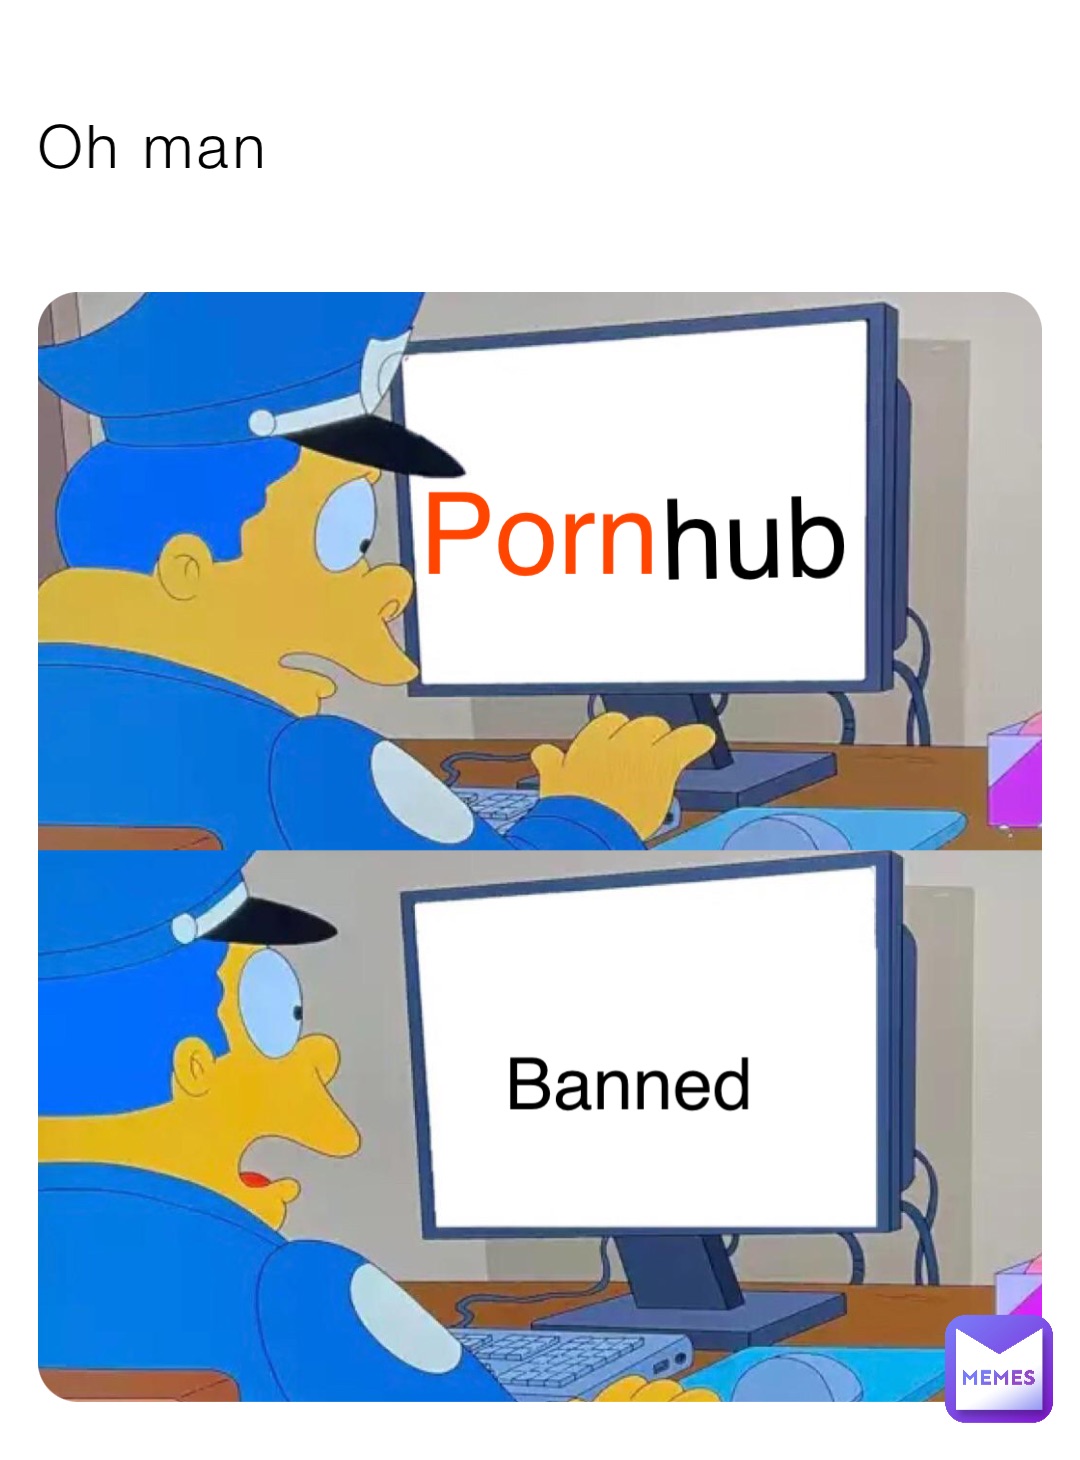 Oh man hub Porn Banned